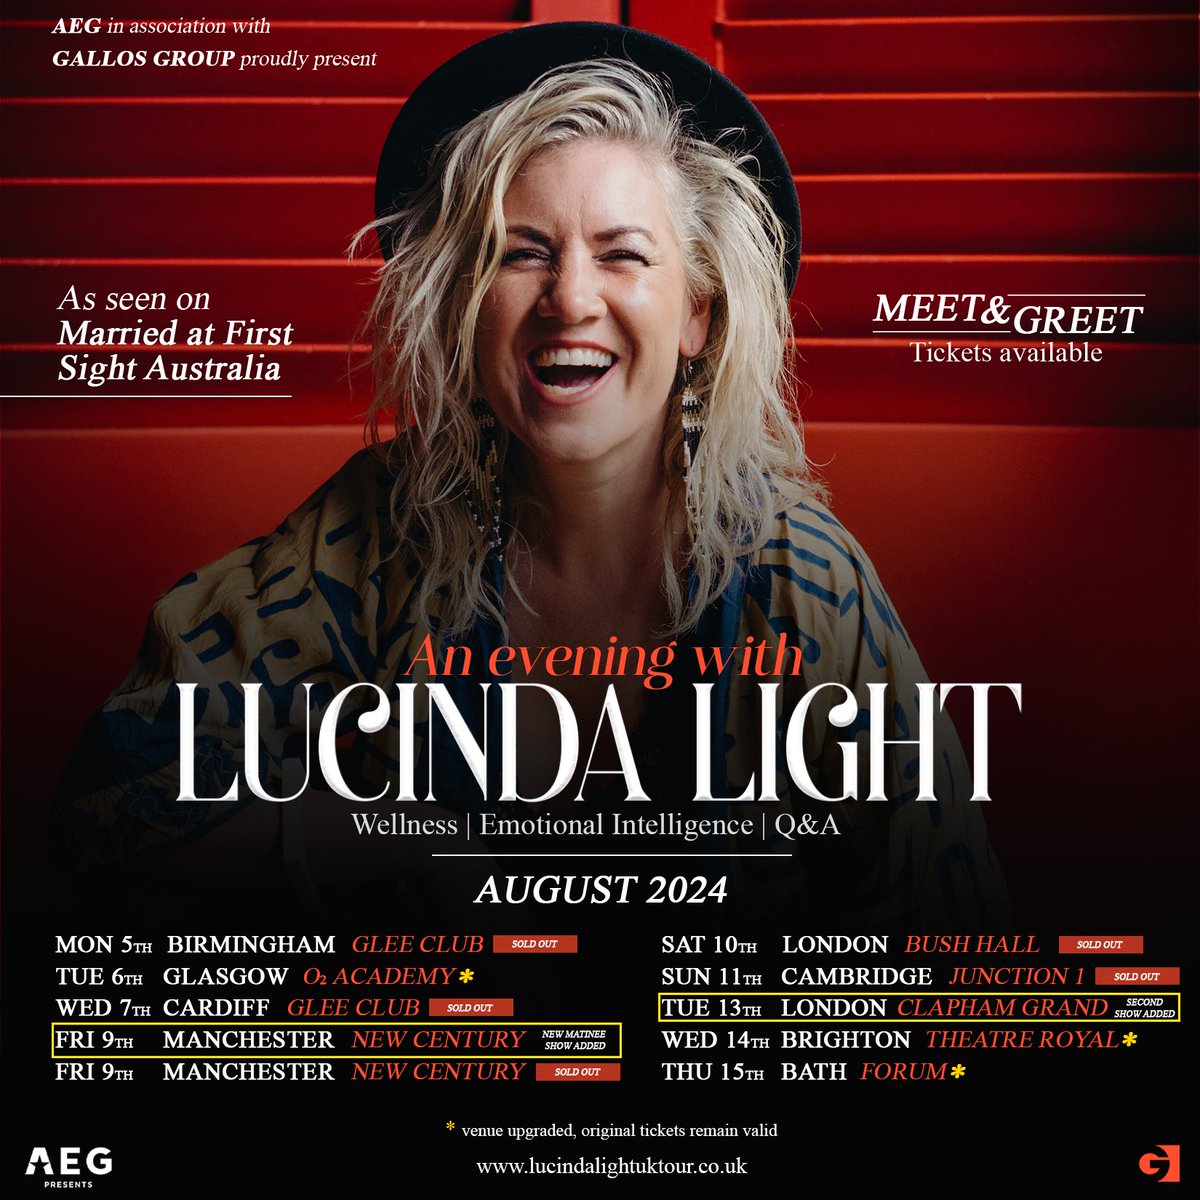 VENUE UPGRADES DUE TO PHENOMENAL DEMAND! Lucinda Light | UK TOUR August 2024 aegp.uk/Lucinda24